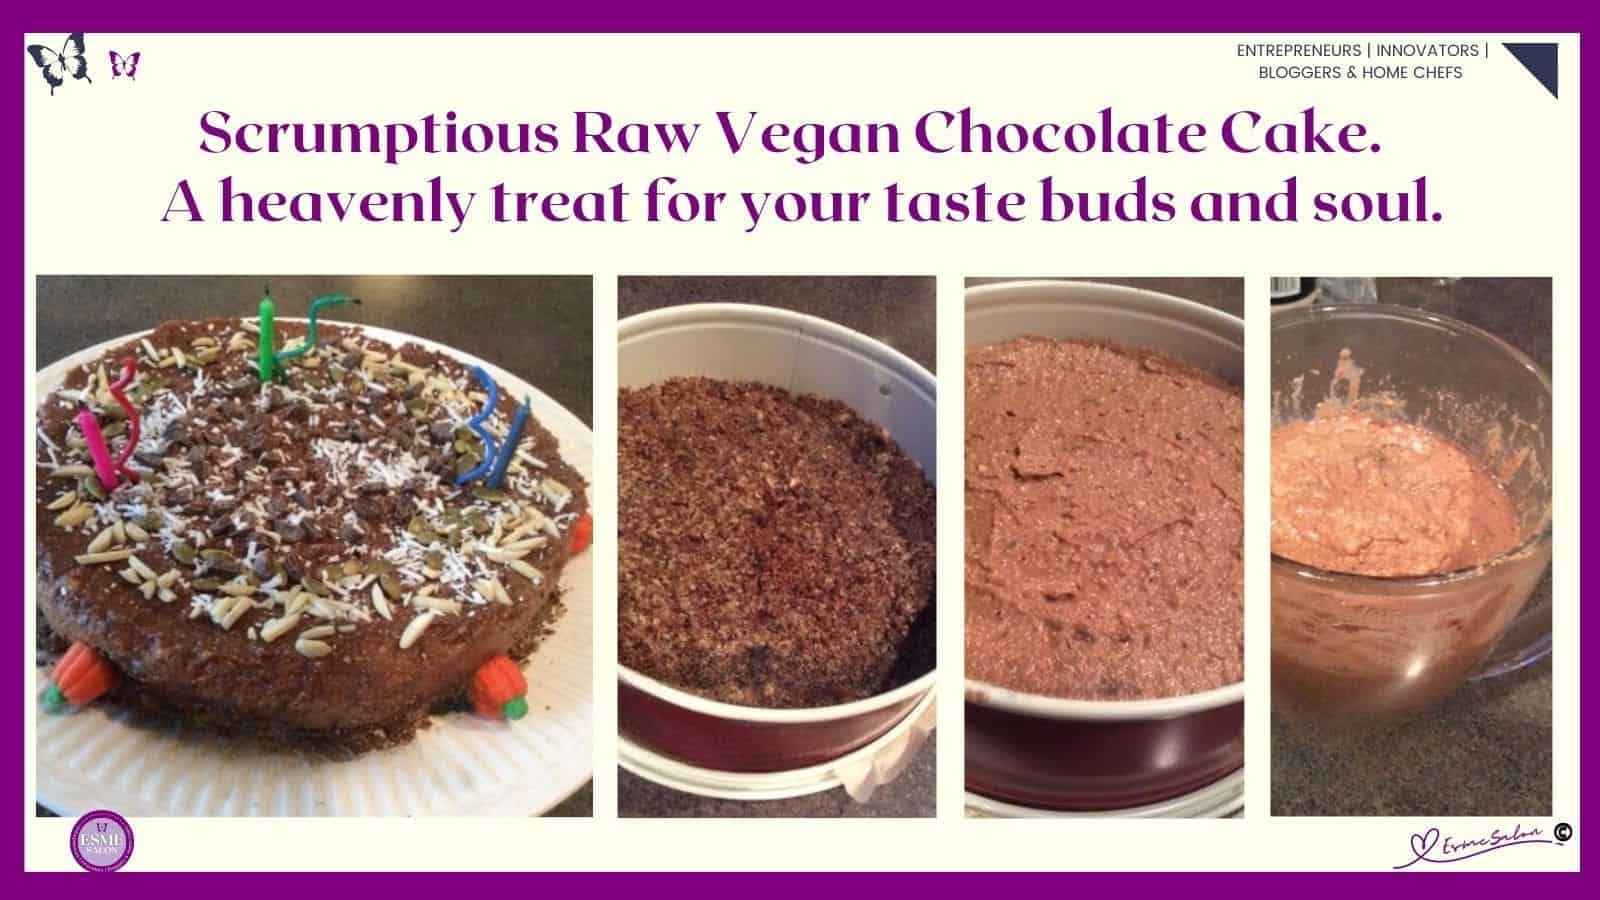 an image of Raw Vegan Chocolate Cake